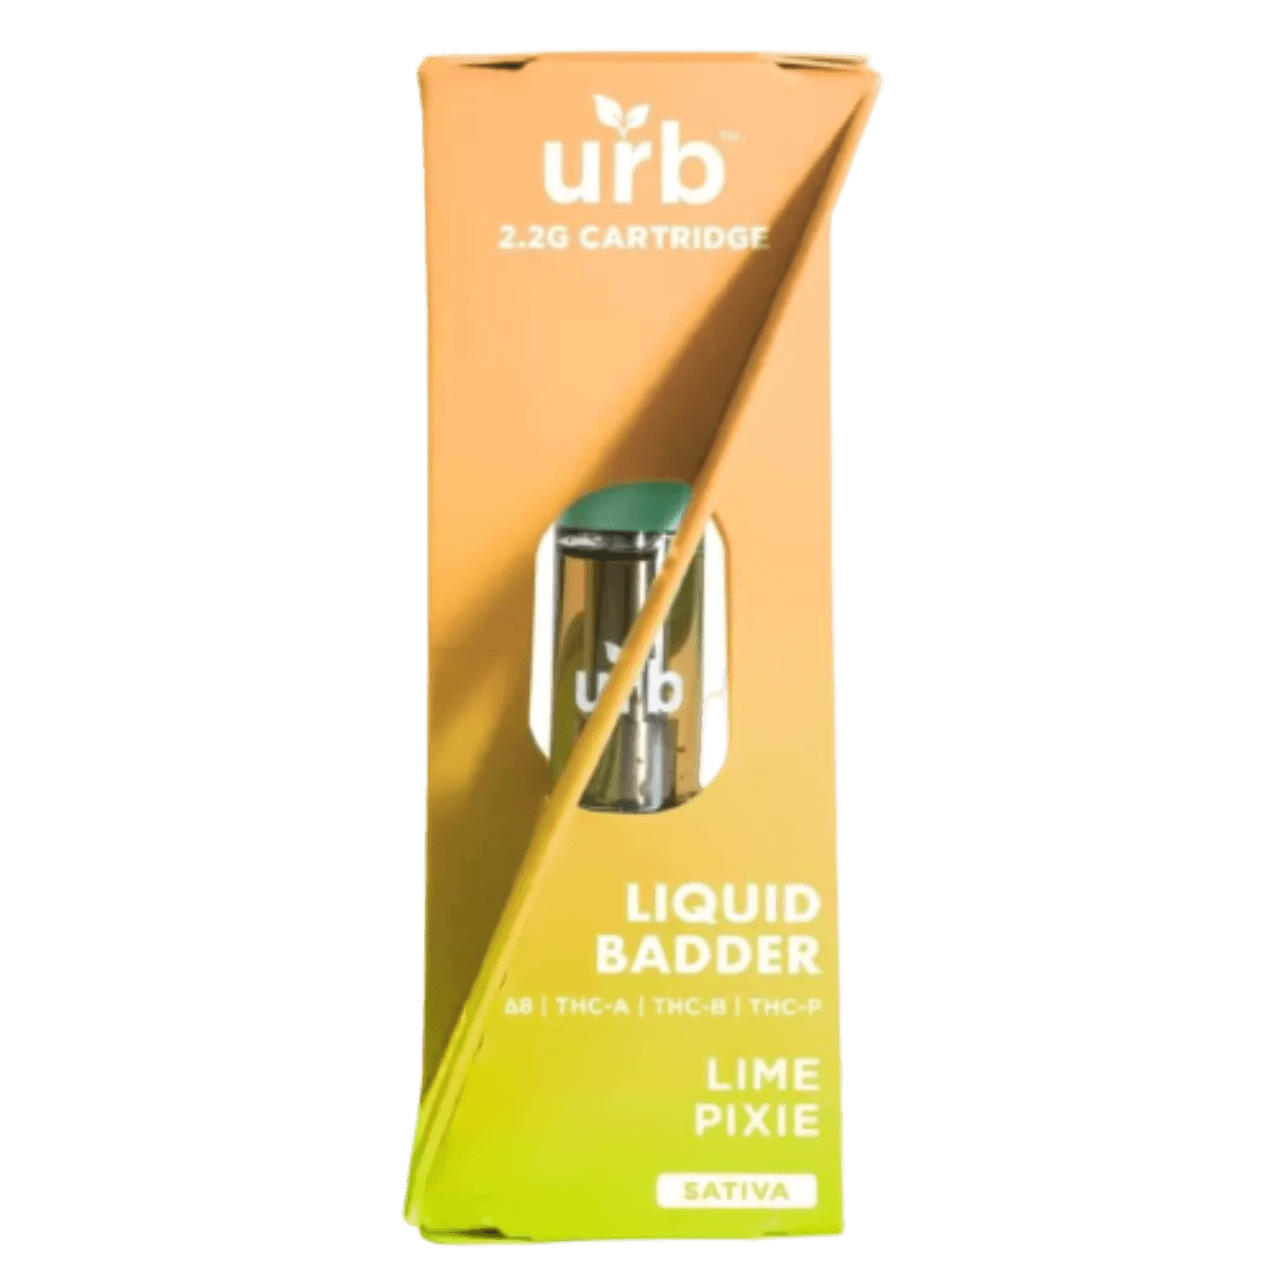 URB Liquid Badder Delta 8 THC-A THC-B THC-P 2.2G Cartridge